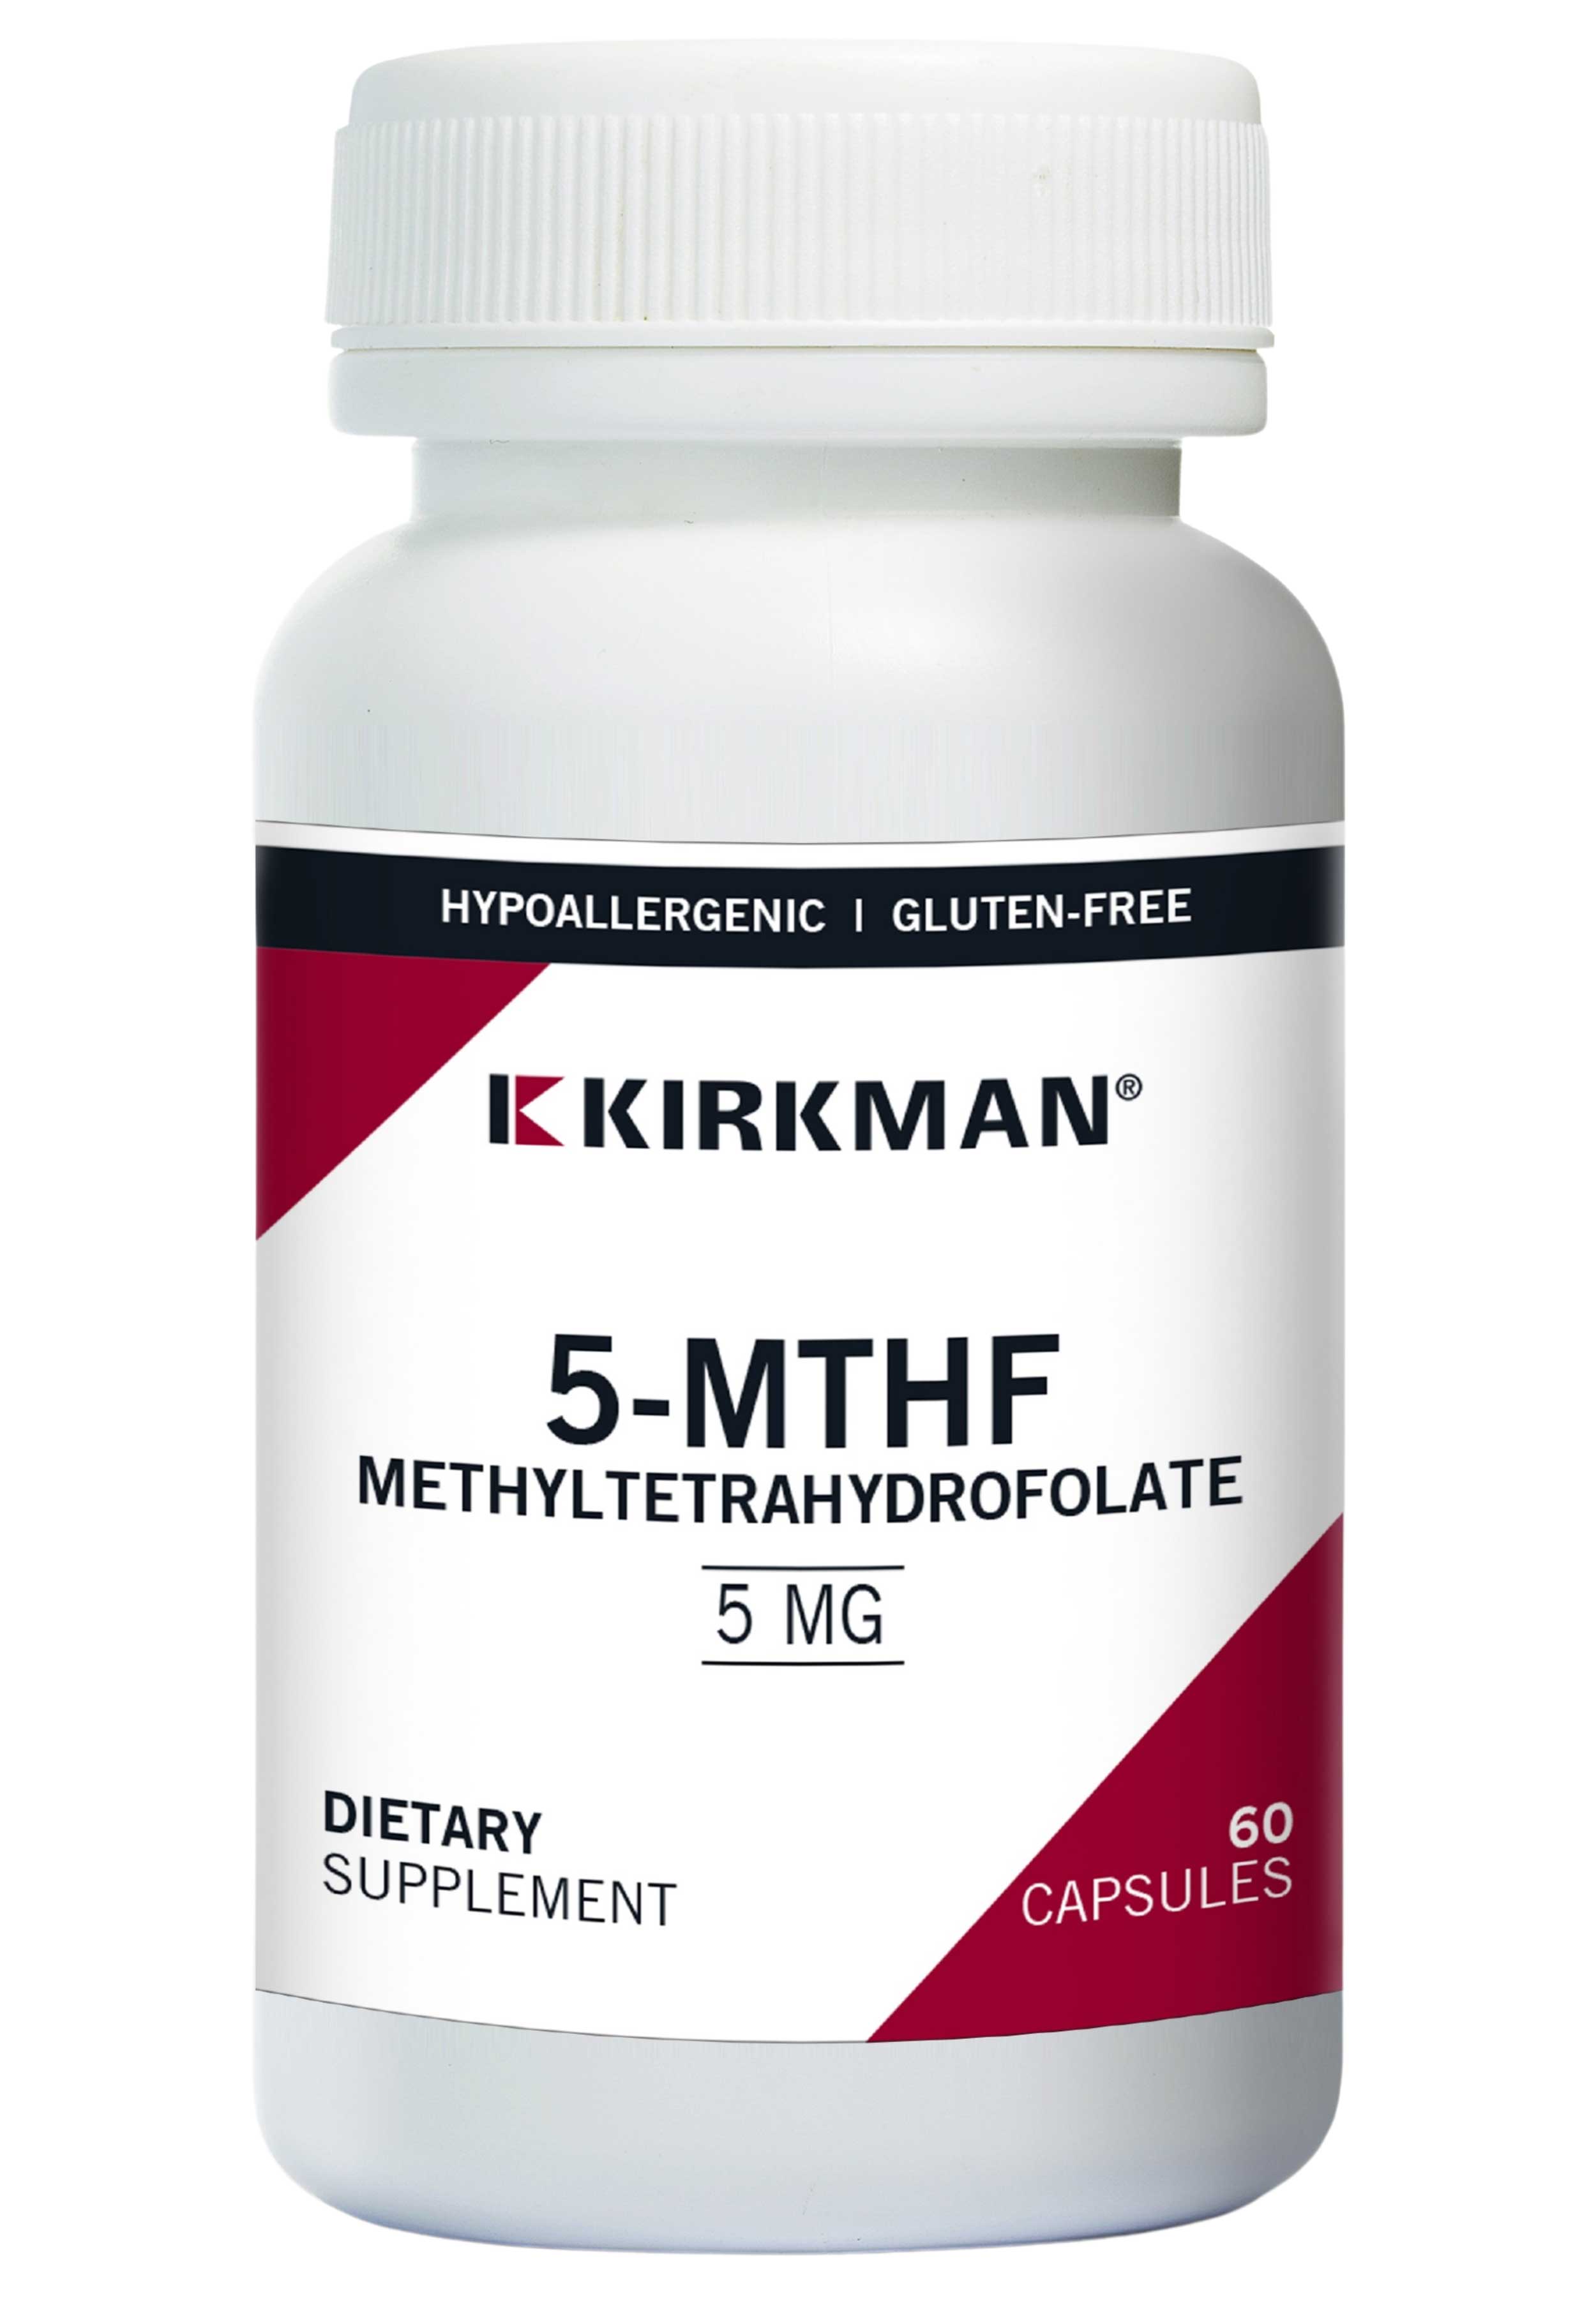 Kirkman 5-MTHF Methyltetrahydrofolate 5mg